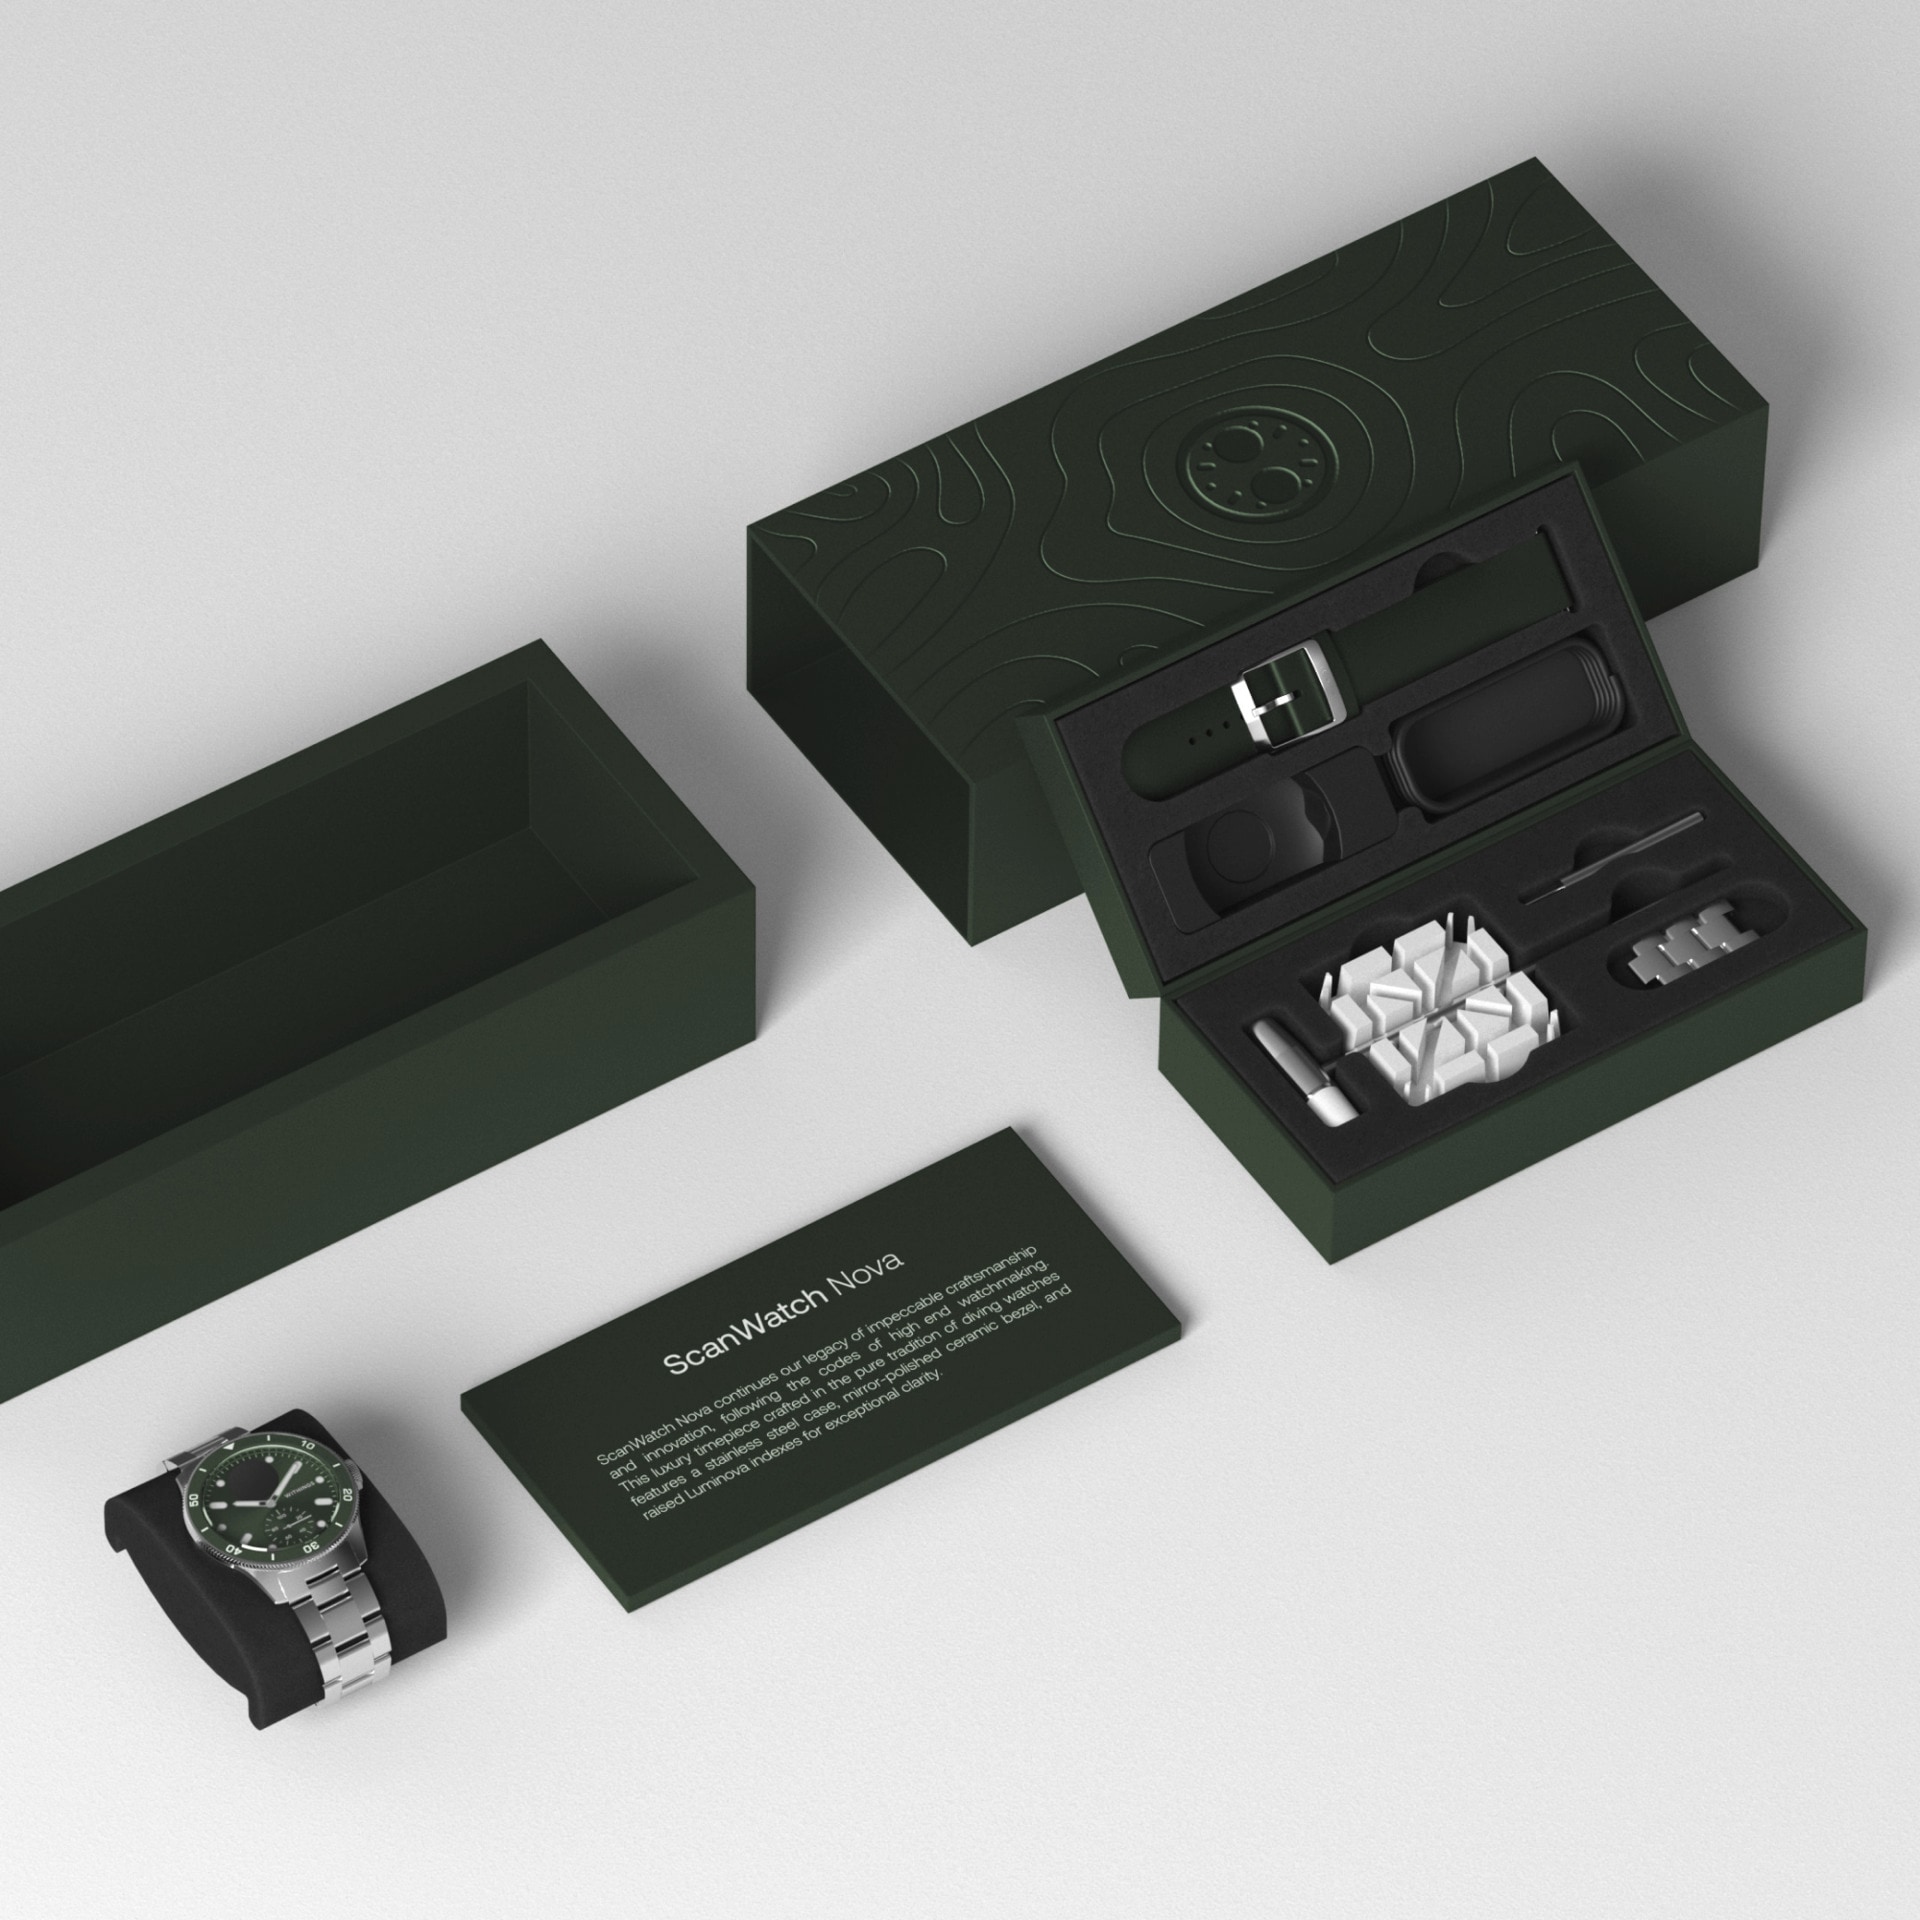 Withings Smartwatch »ScanWatch Nova«, (Proprietär EKG, Körpertemperaturmessung, Taucheruhr Design, 10 ATM)